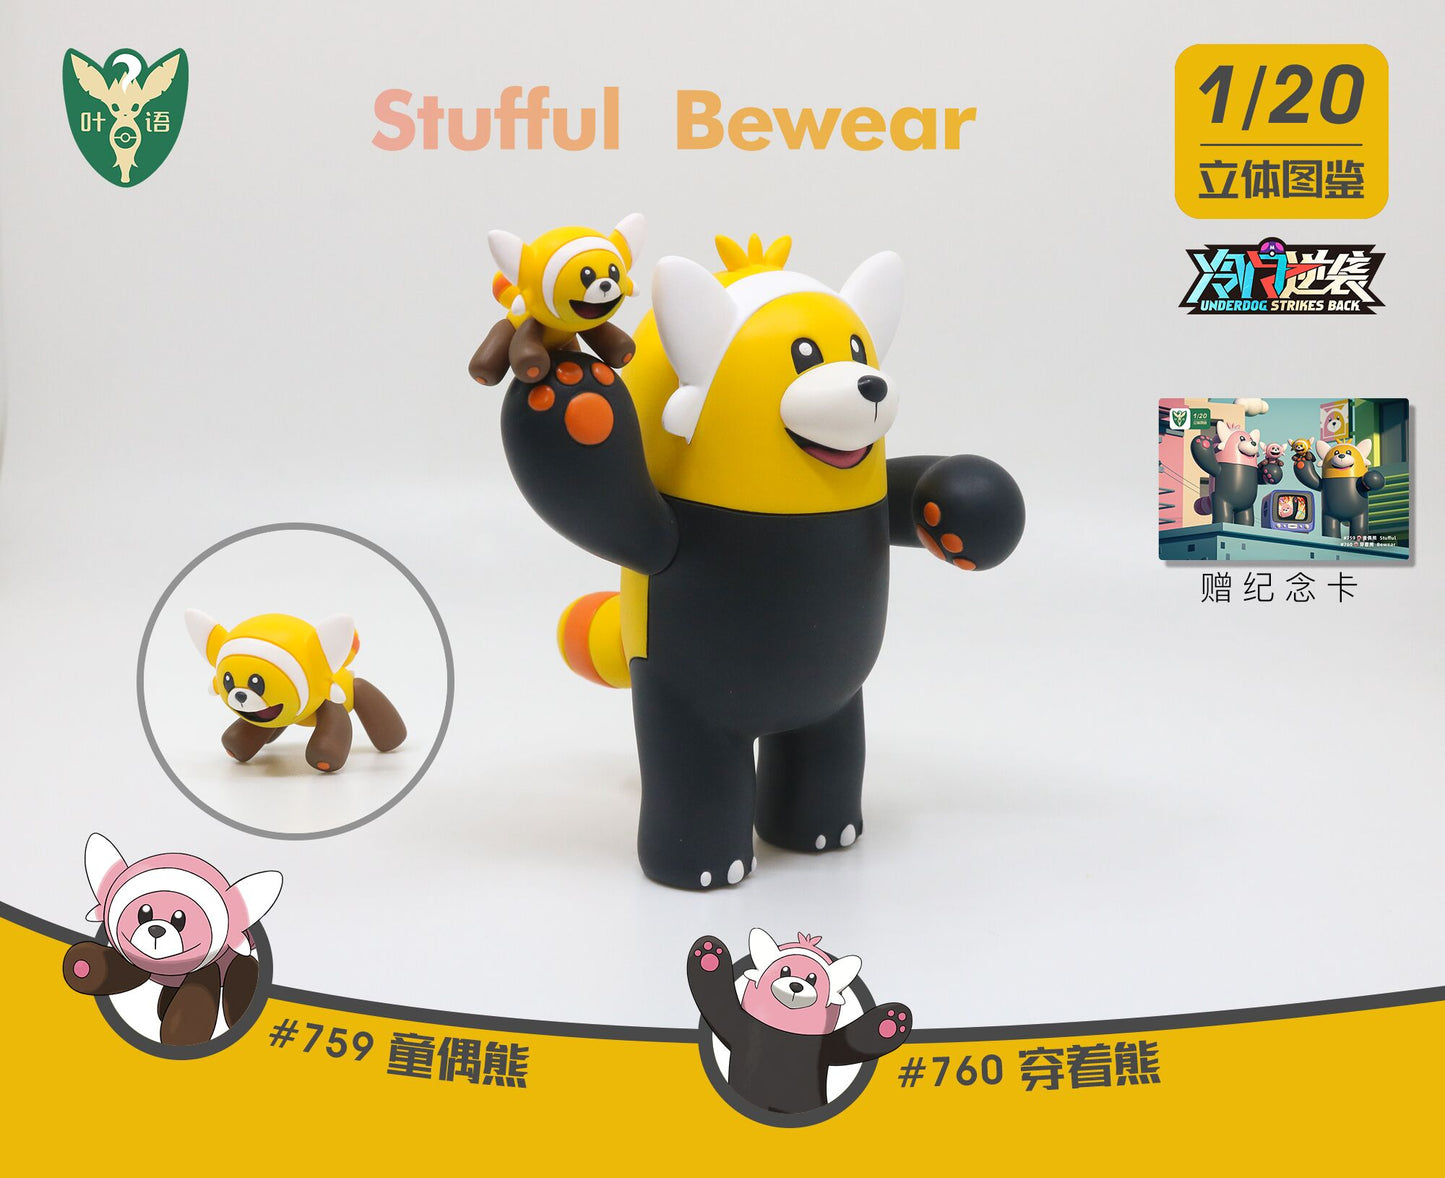 〖In Stock〗Pokemon Scale World Stufful Bewear #759 #760 1:20 - Yeyu Studio